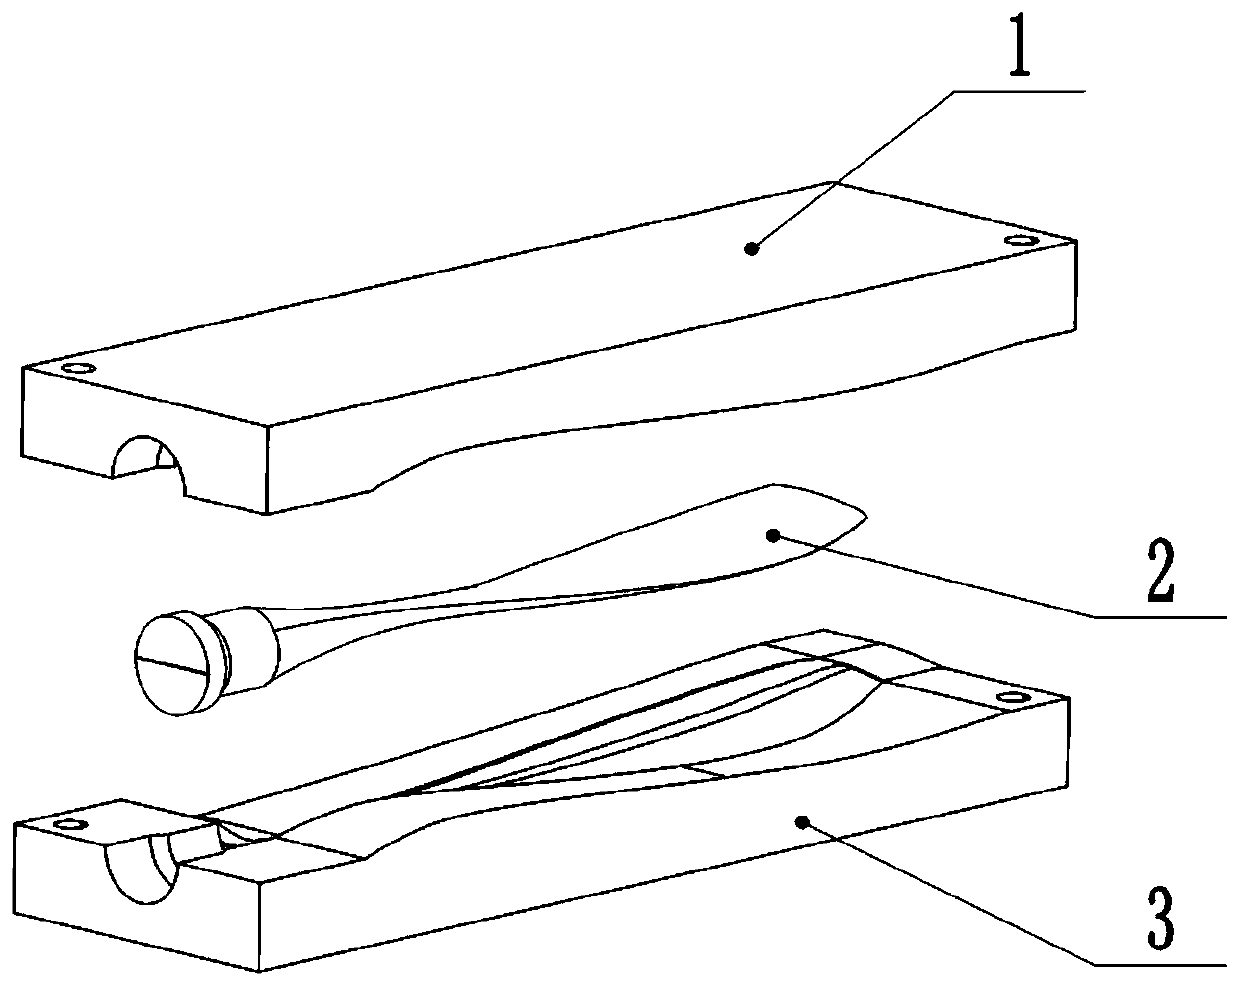 Manufacturing method of propeller blade